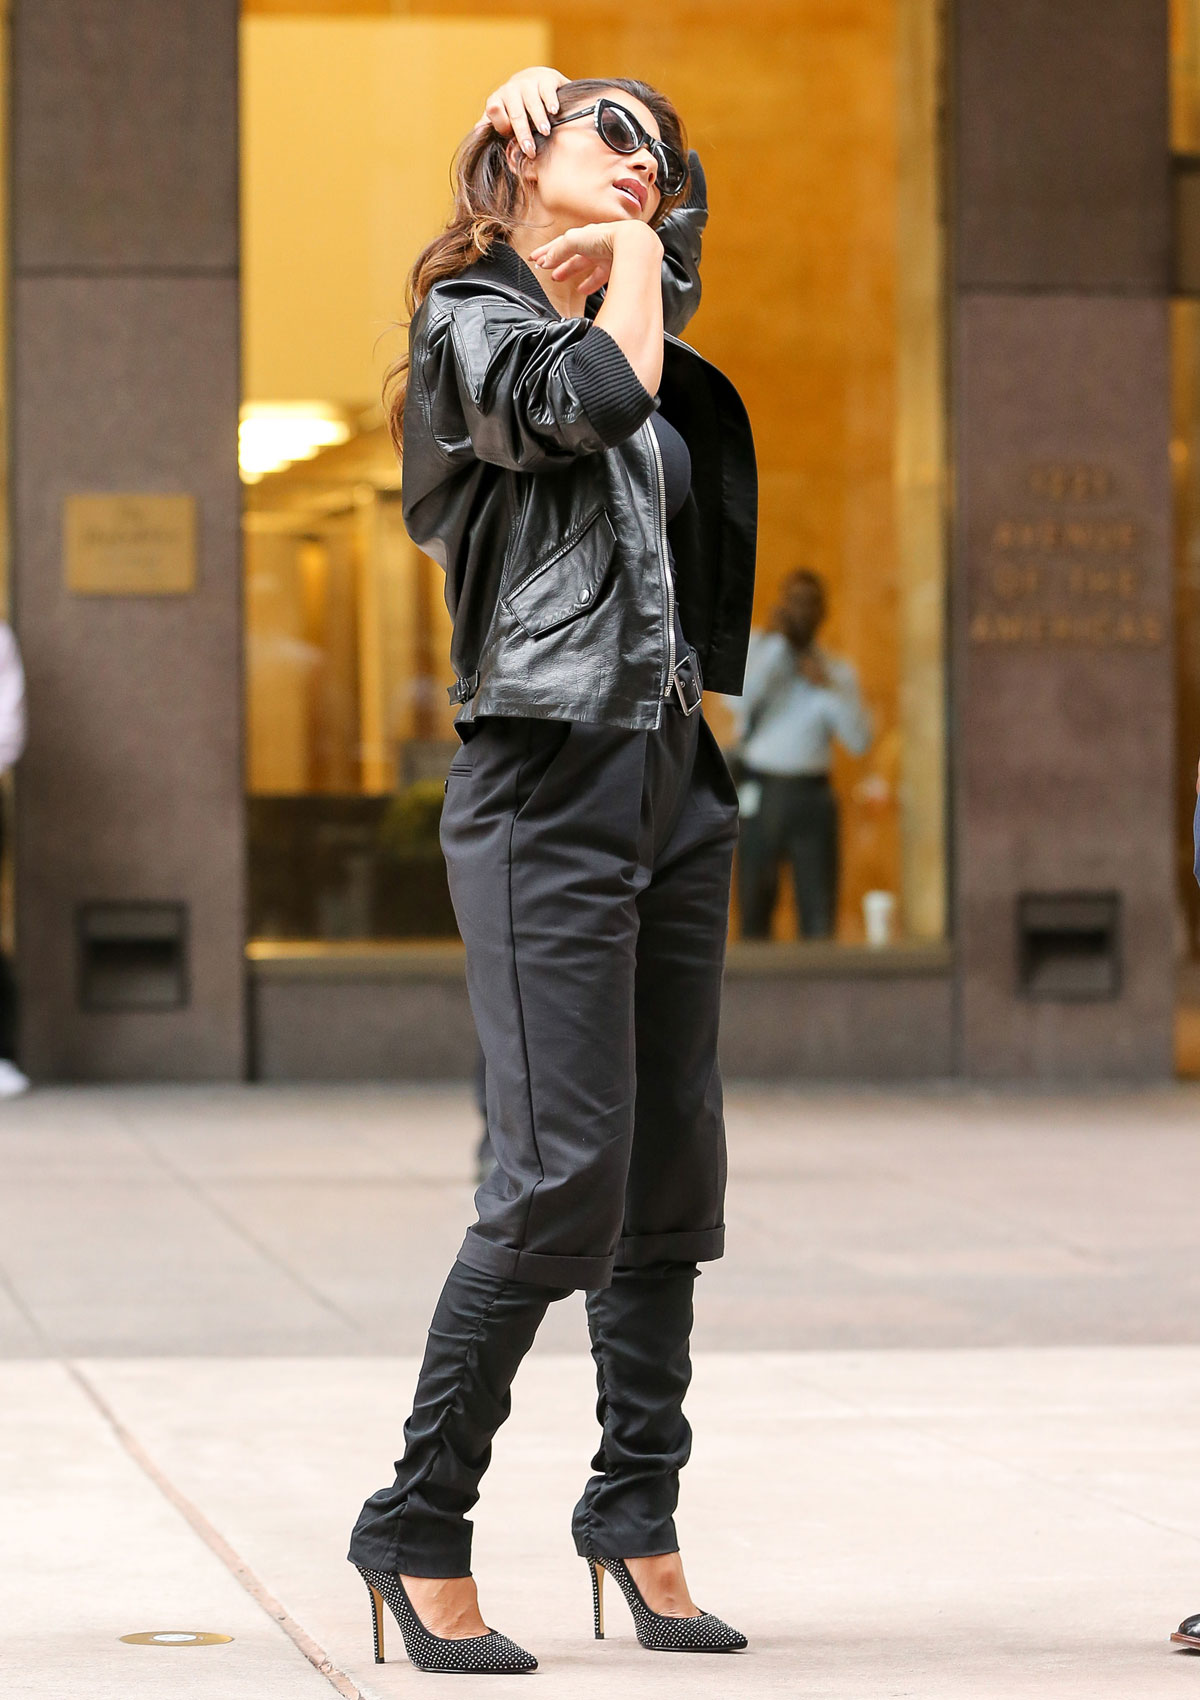 Nicole Scherzinger was spotted leaving SiriusXM Radio New York